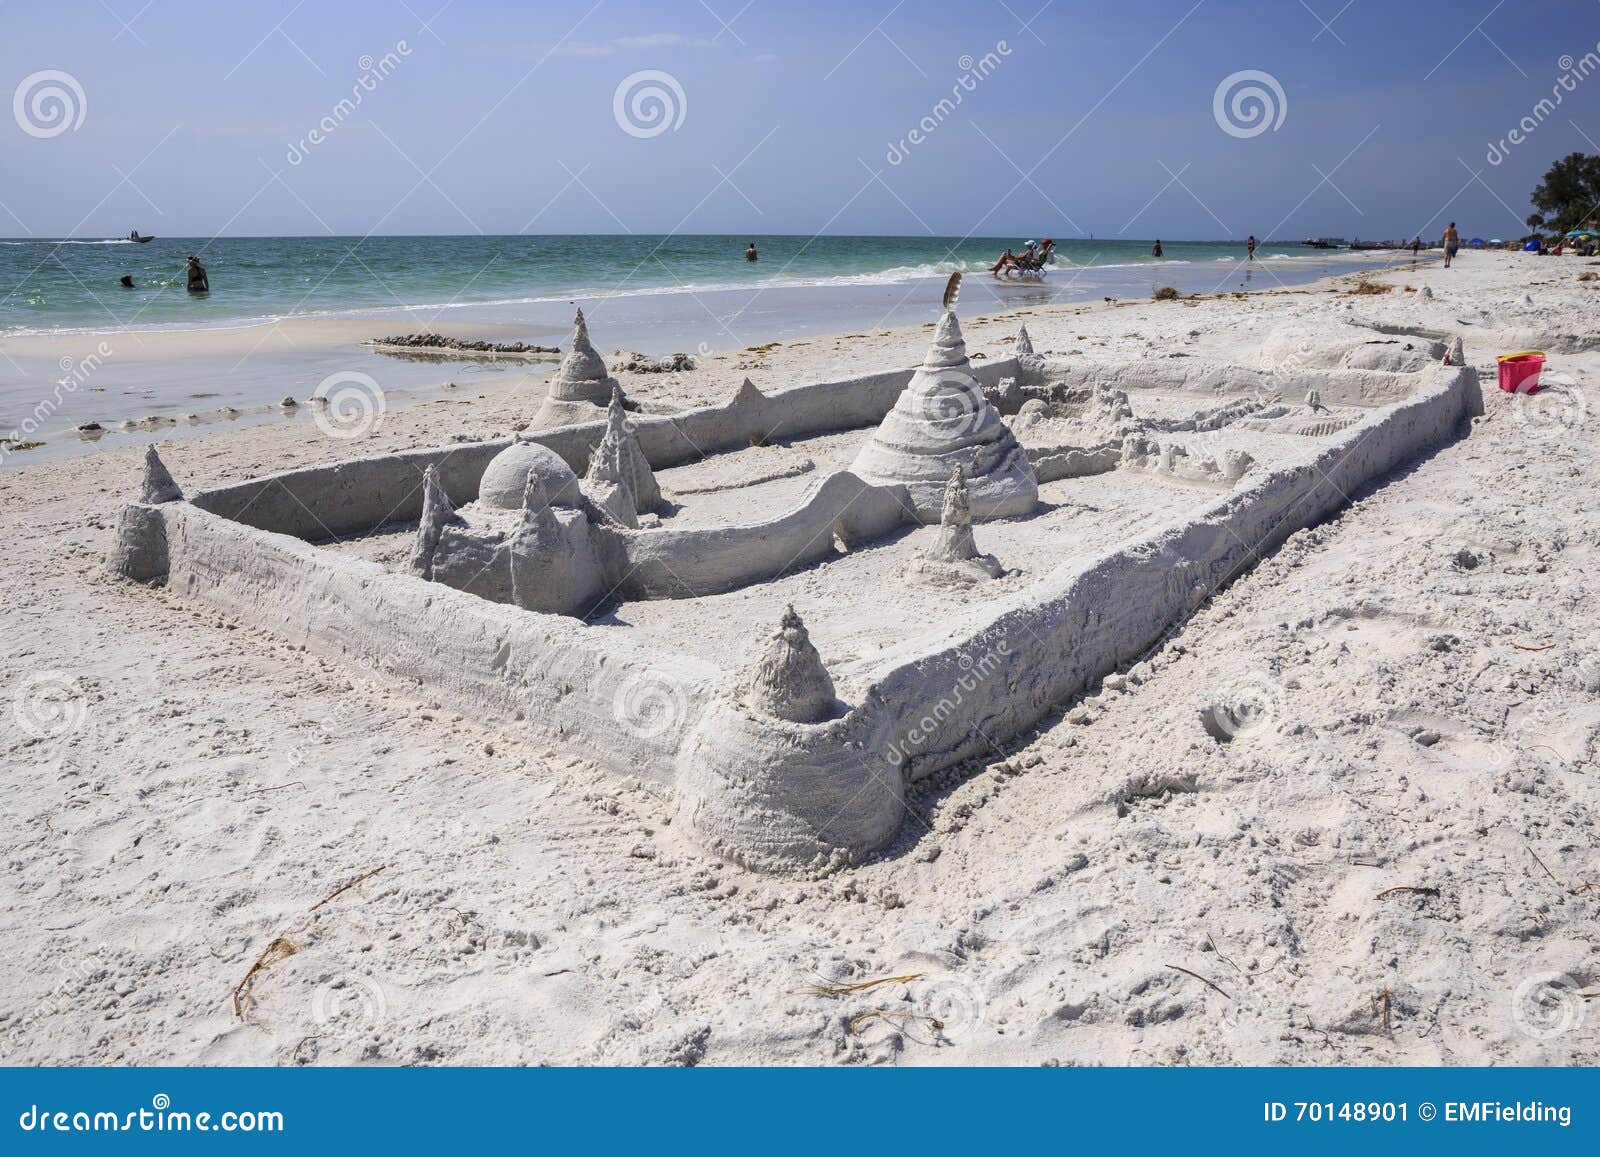 Sand Castle Siesta Key Florida Stock Image Image Of Travel